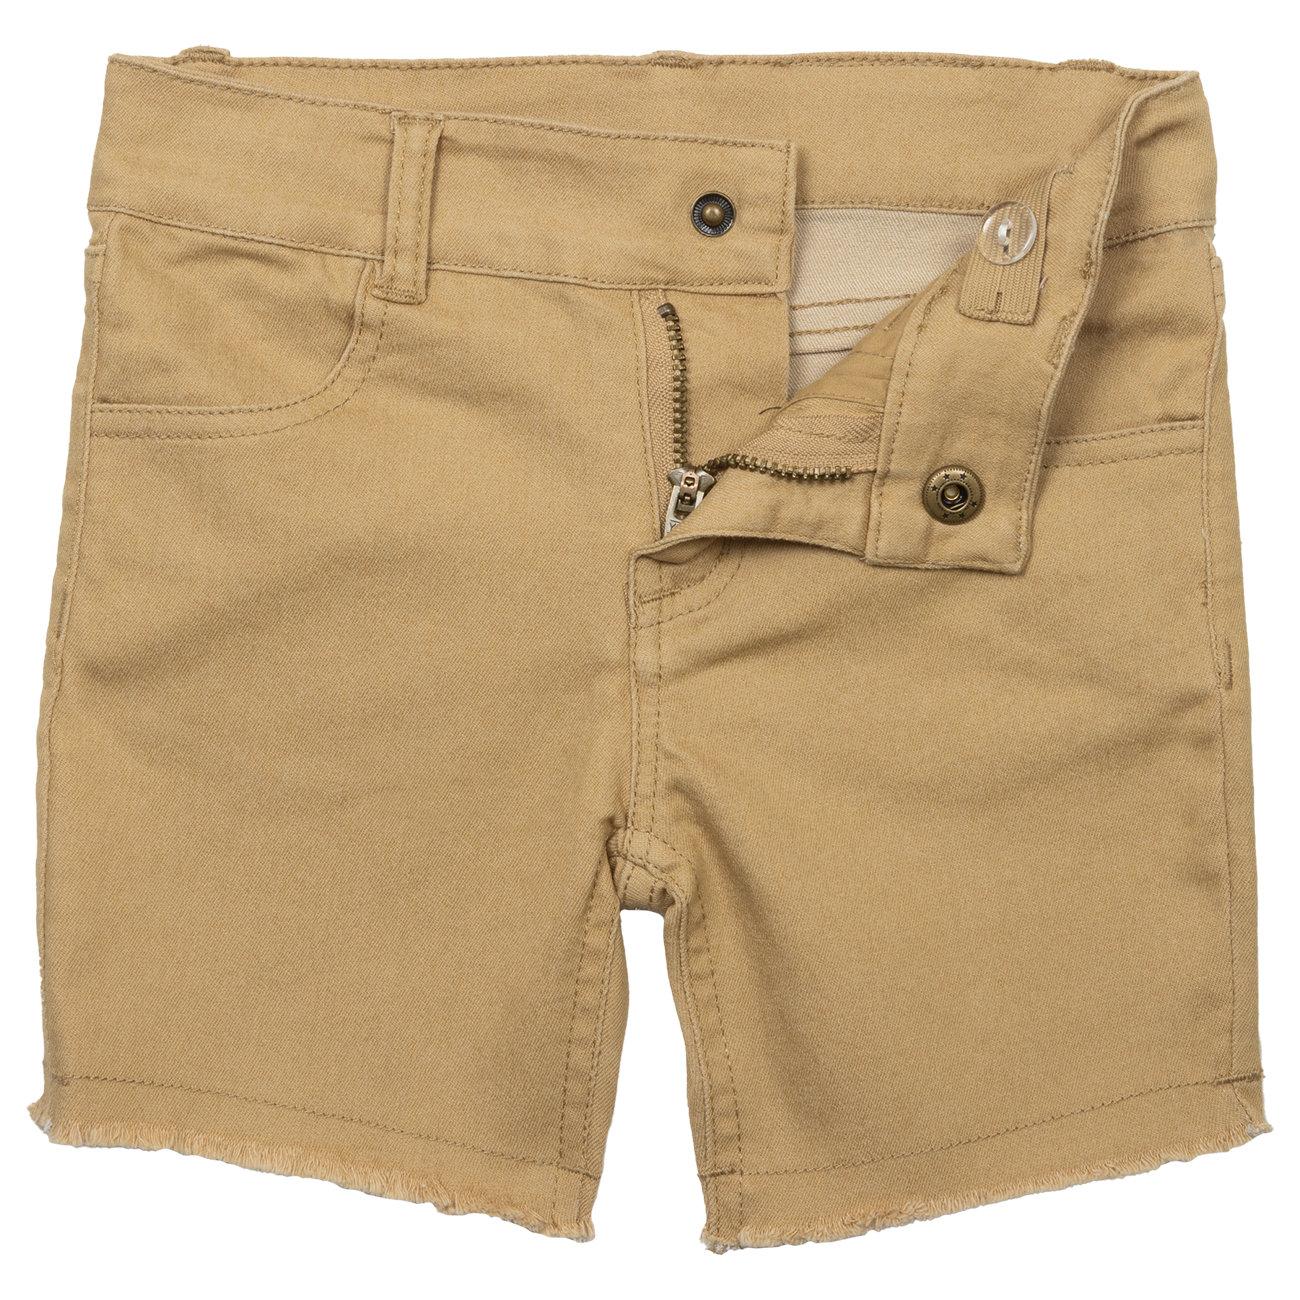 Waco Shorts (Tan): 2 years - 3 years